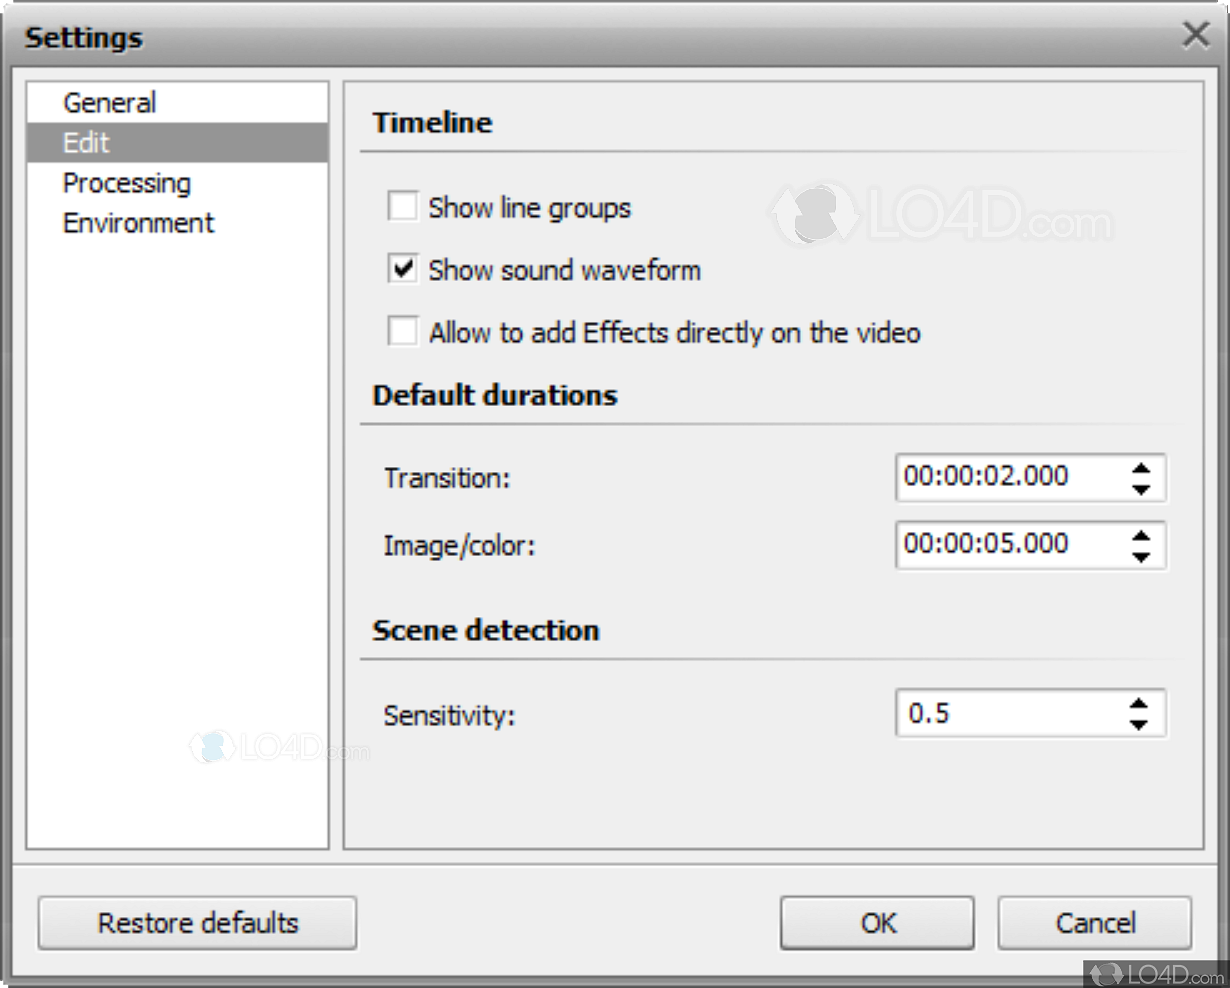 avs video editor windows 10